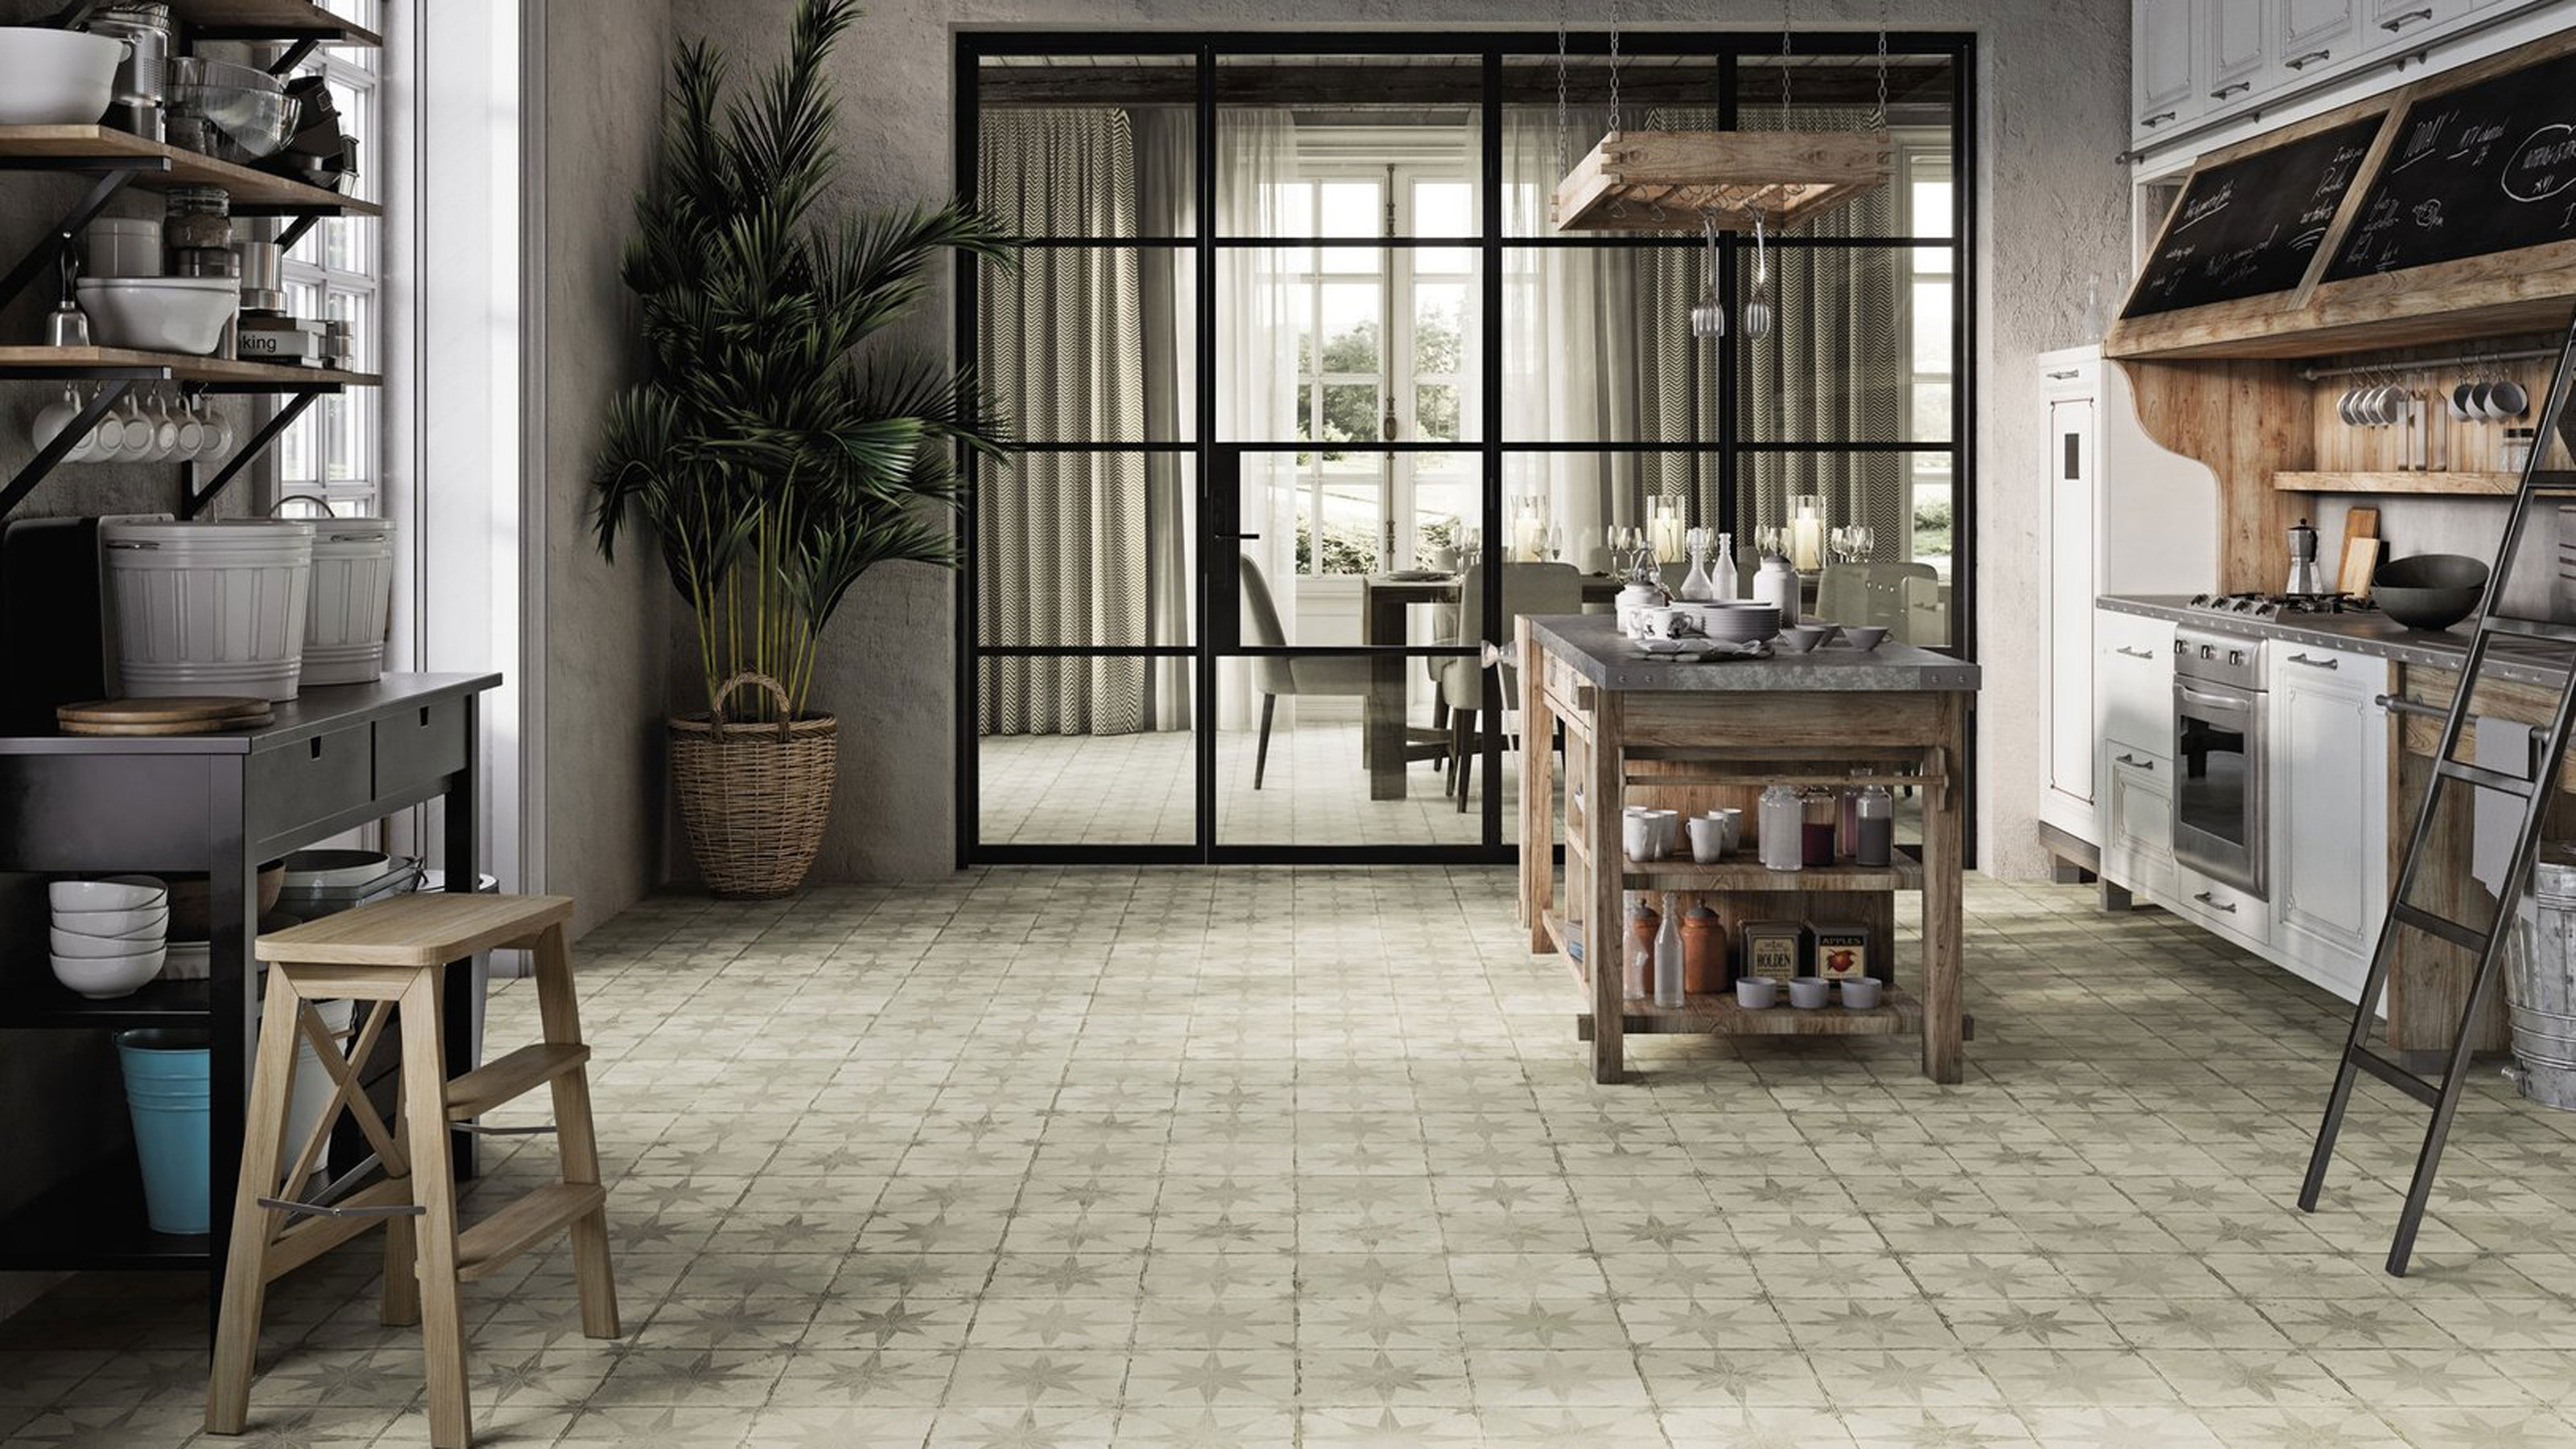 Kitchen floor tile ideas – 18 stylish tile designs for kitchen ...